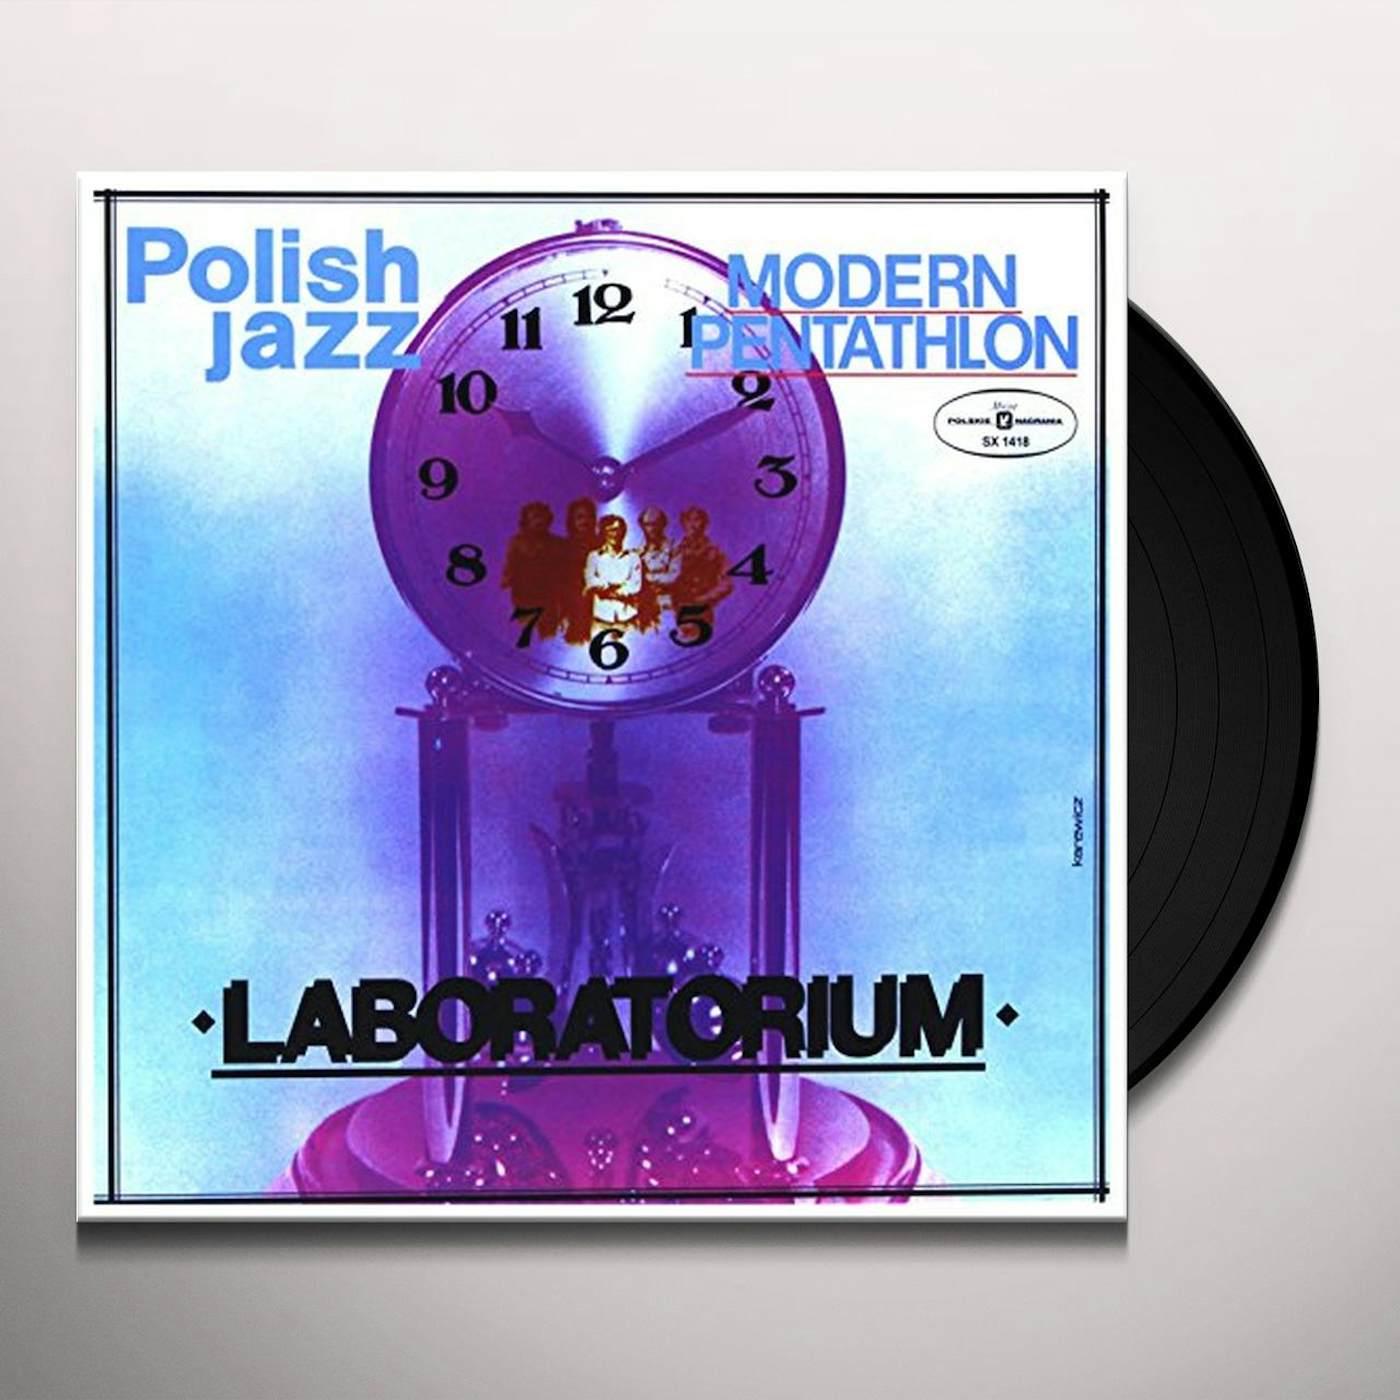 Laboratorium Modern Pentathlon (Polish Jazz) Vinyl Record